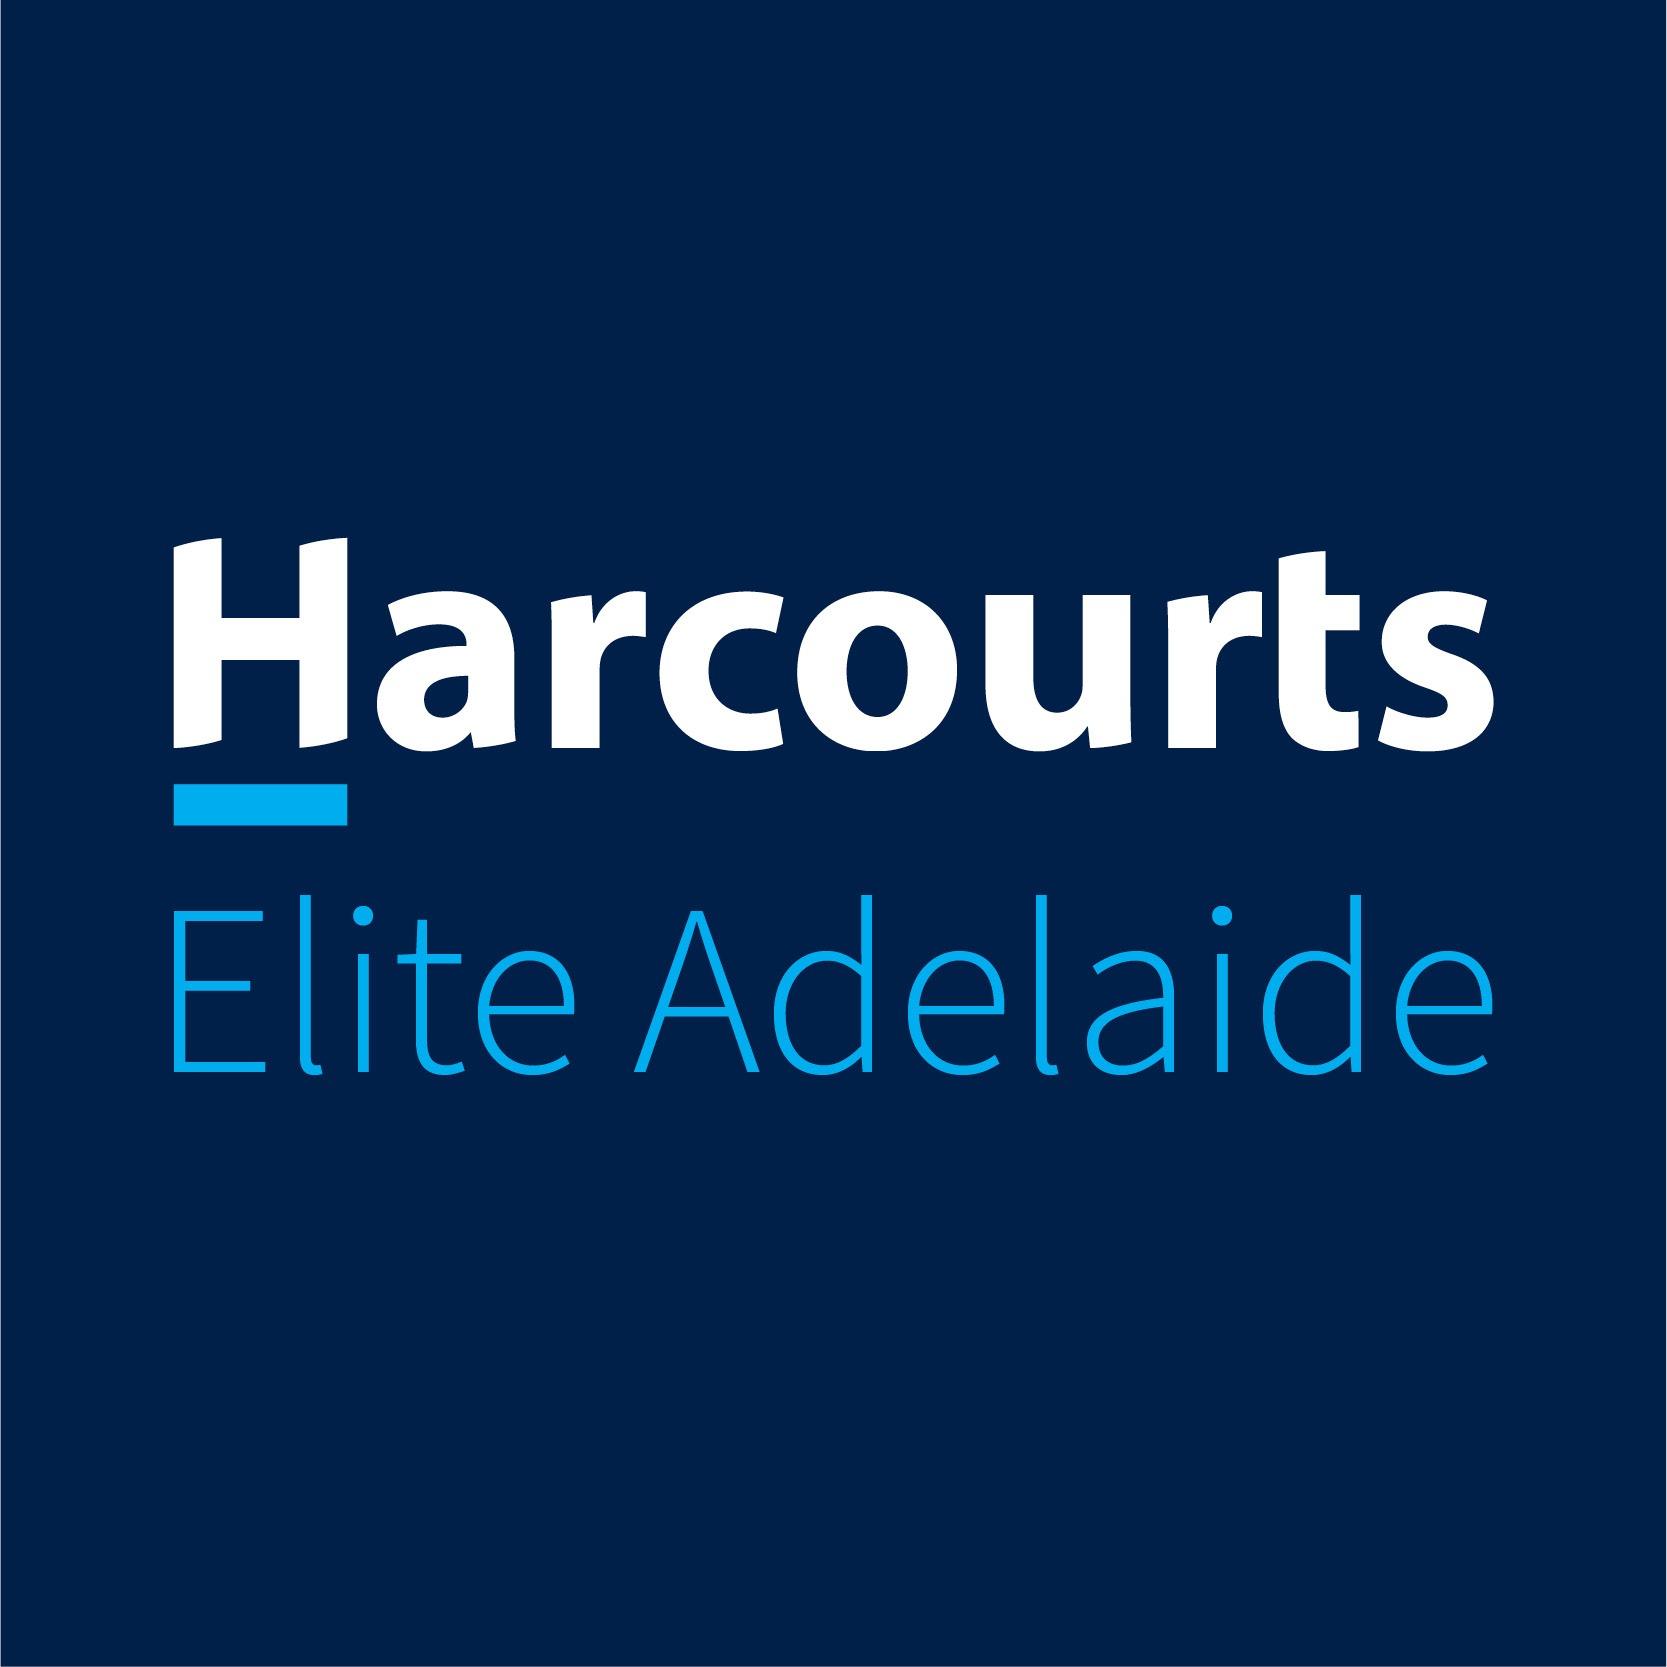 Harcourts Elite Adelaide - Hillcrest, SA 5086 - (08) 8266 3800 | ShowMeLocal.com